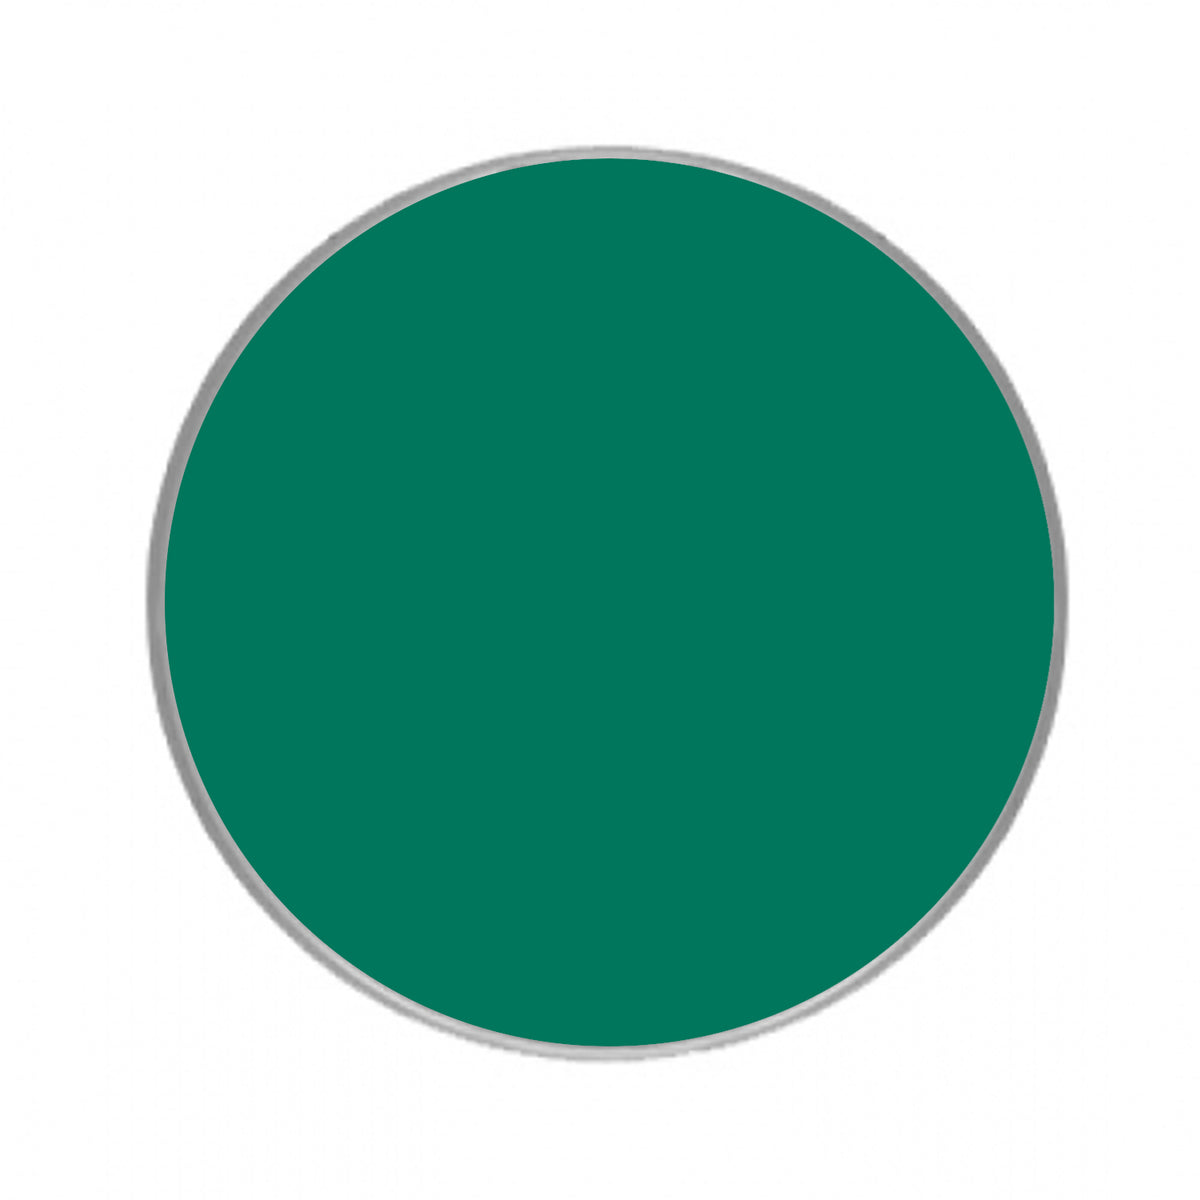 Kryolan Aquacolor - Bright Green - GR42